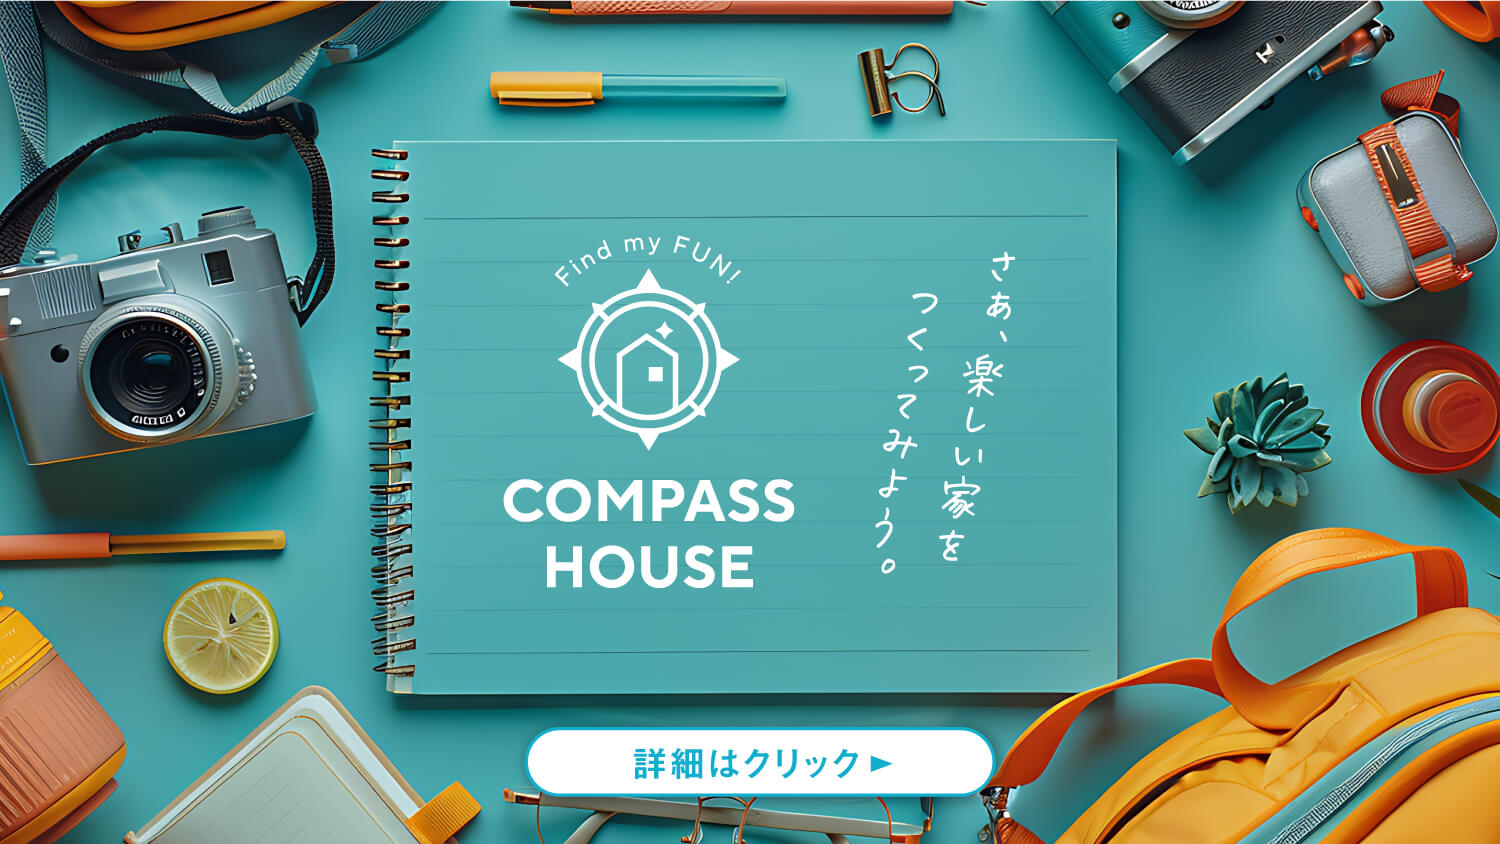 COMPASS HOUSE